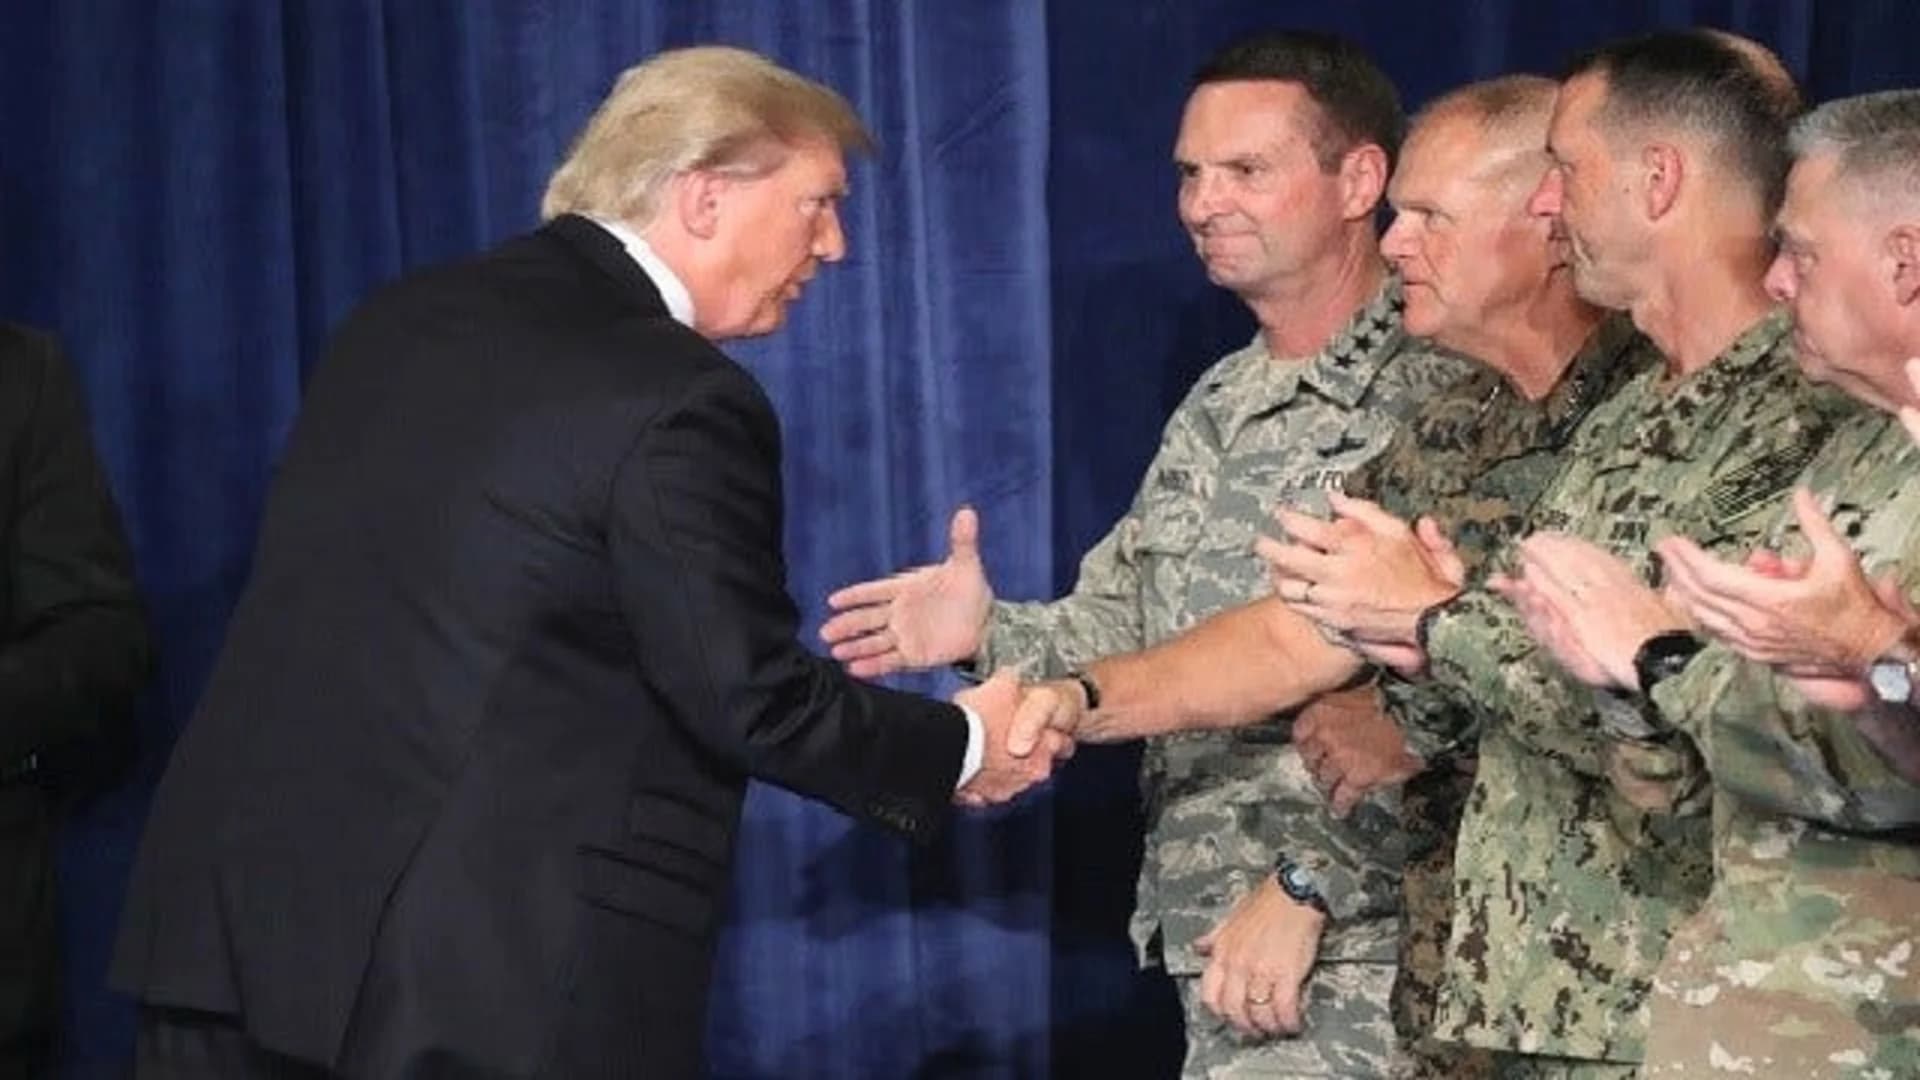 Pentagon says Trump ordered Washington military parade